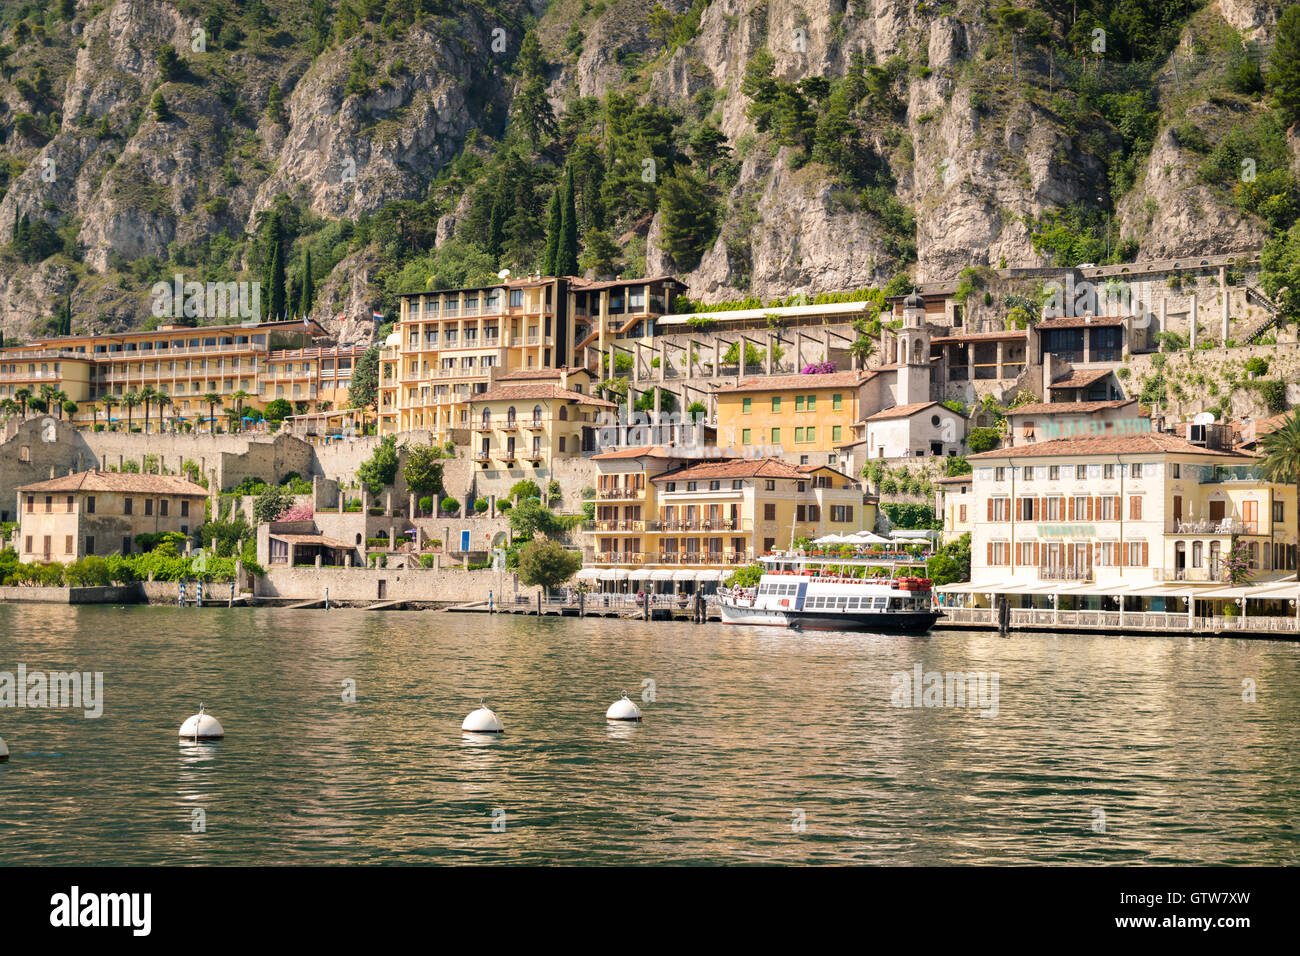 Lake Garda, Italy - June 29, 2016: Limone sul Garda is a town in ...